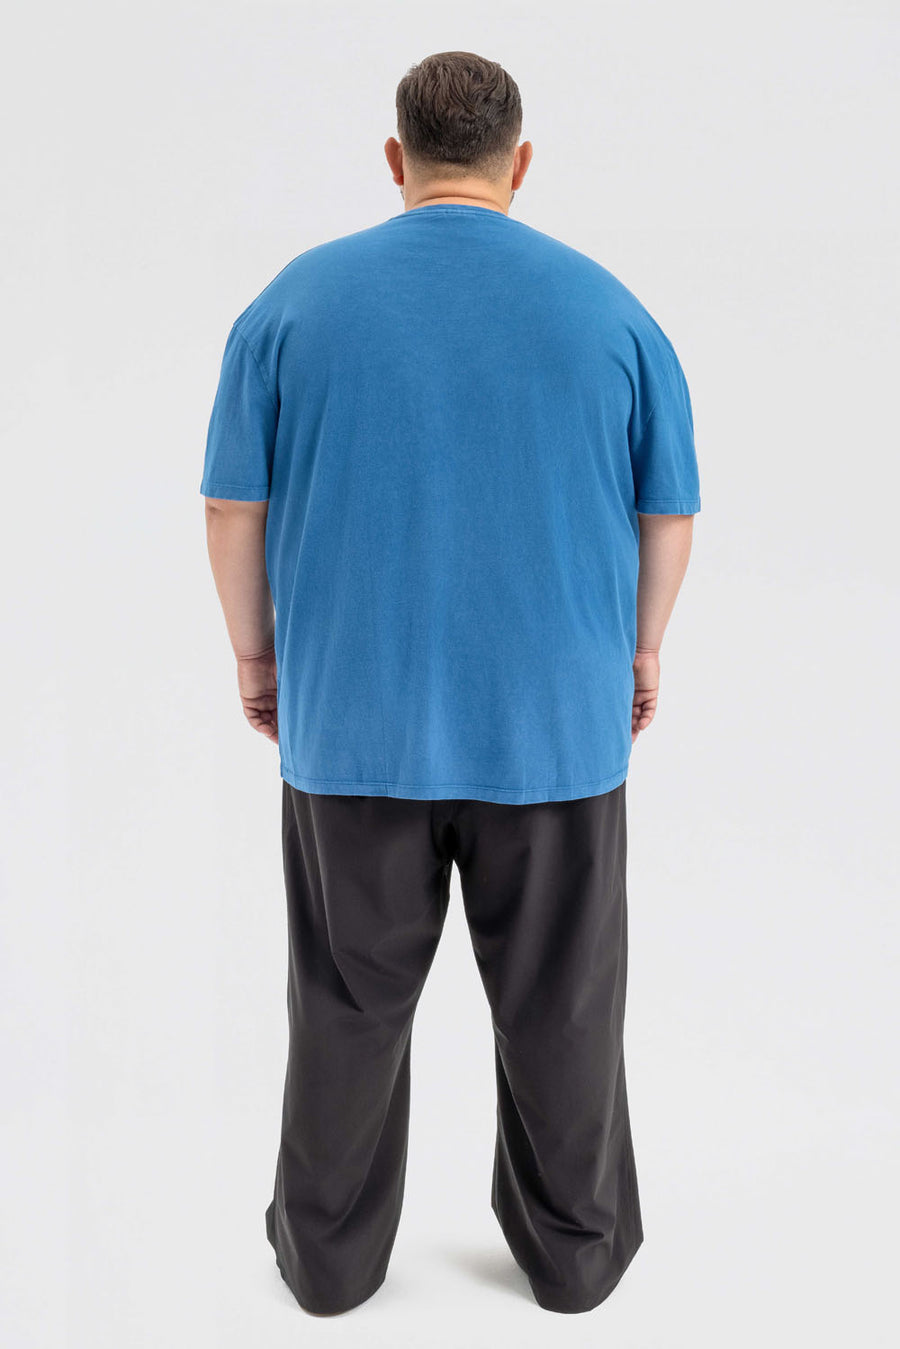 GNP Acid Washed Cut And Sew Blue T-Shirt 